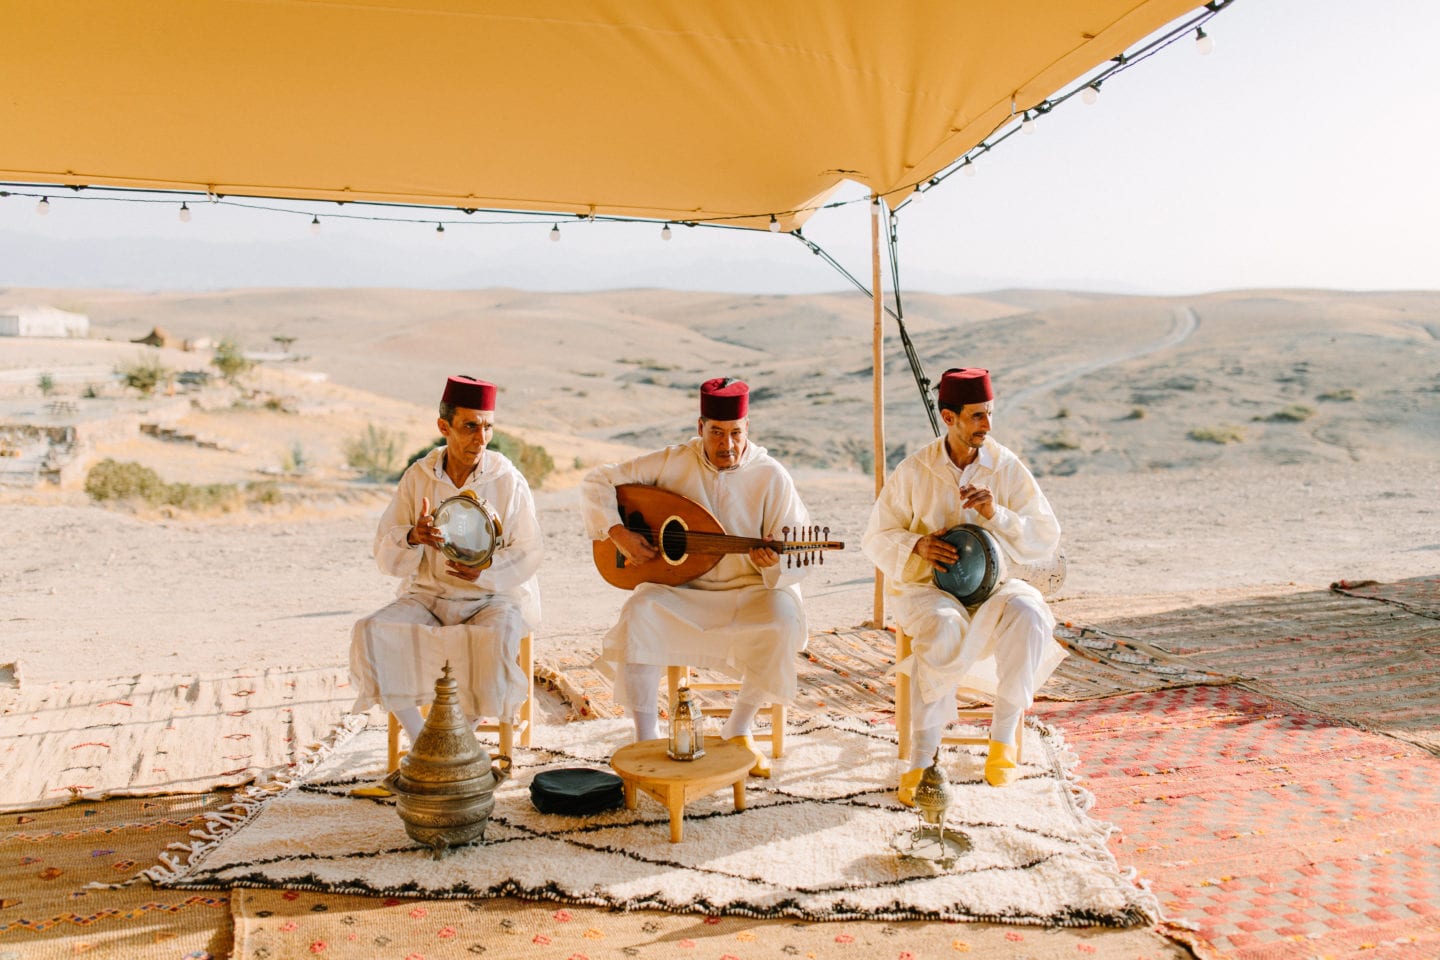 Terre des Etoiles wedding planner marrakech morocco marokko mariage desert agafay